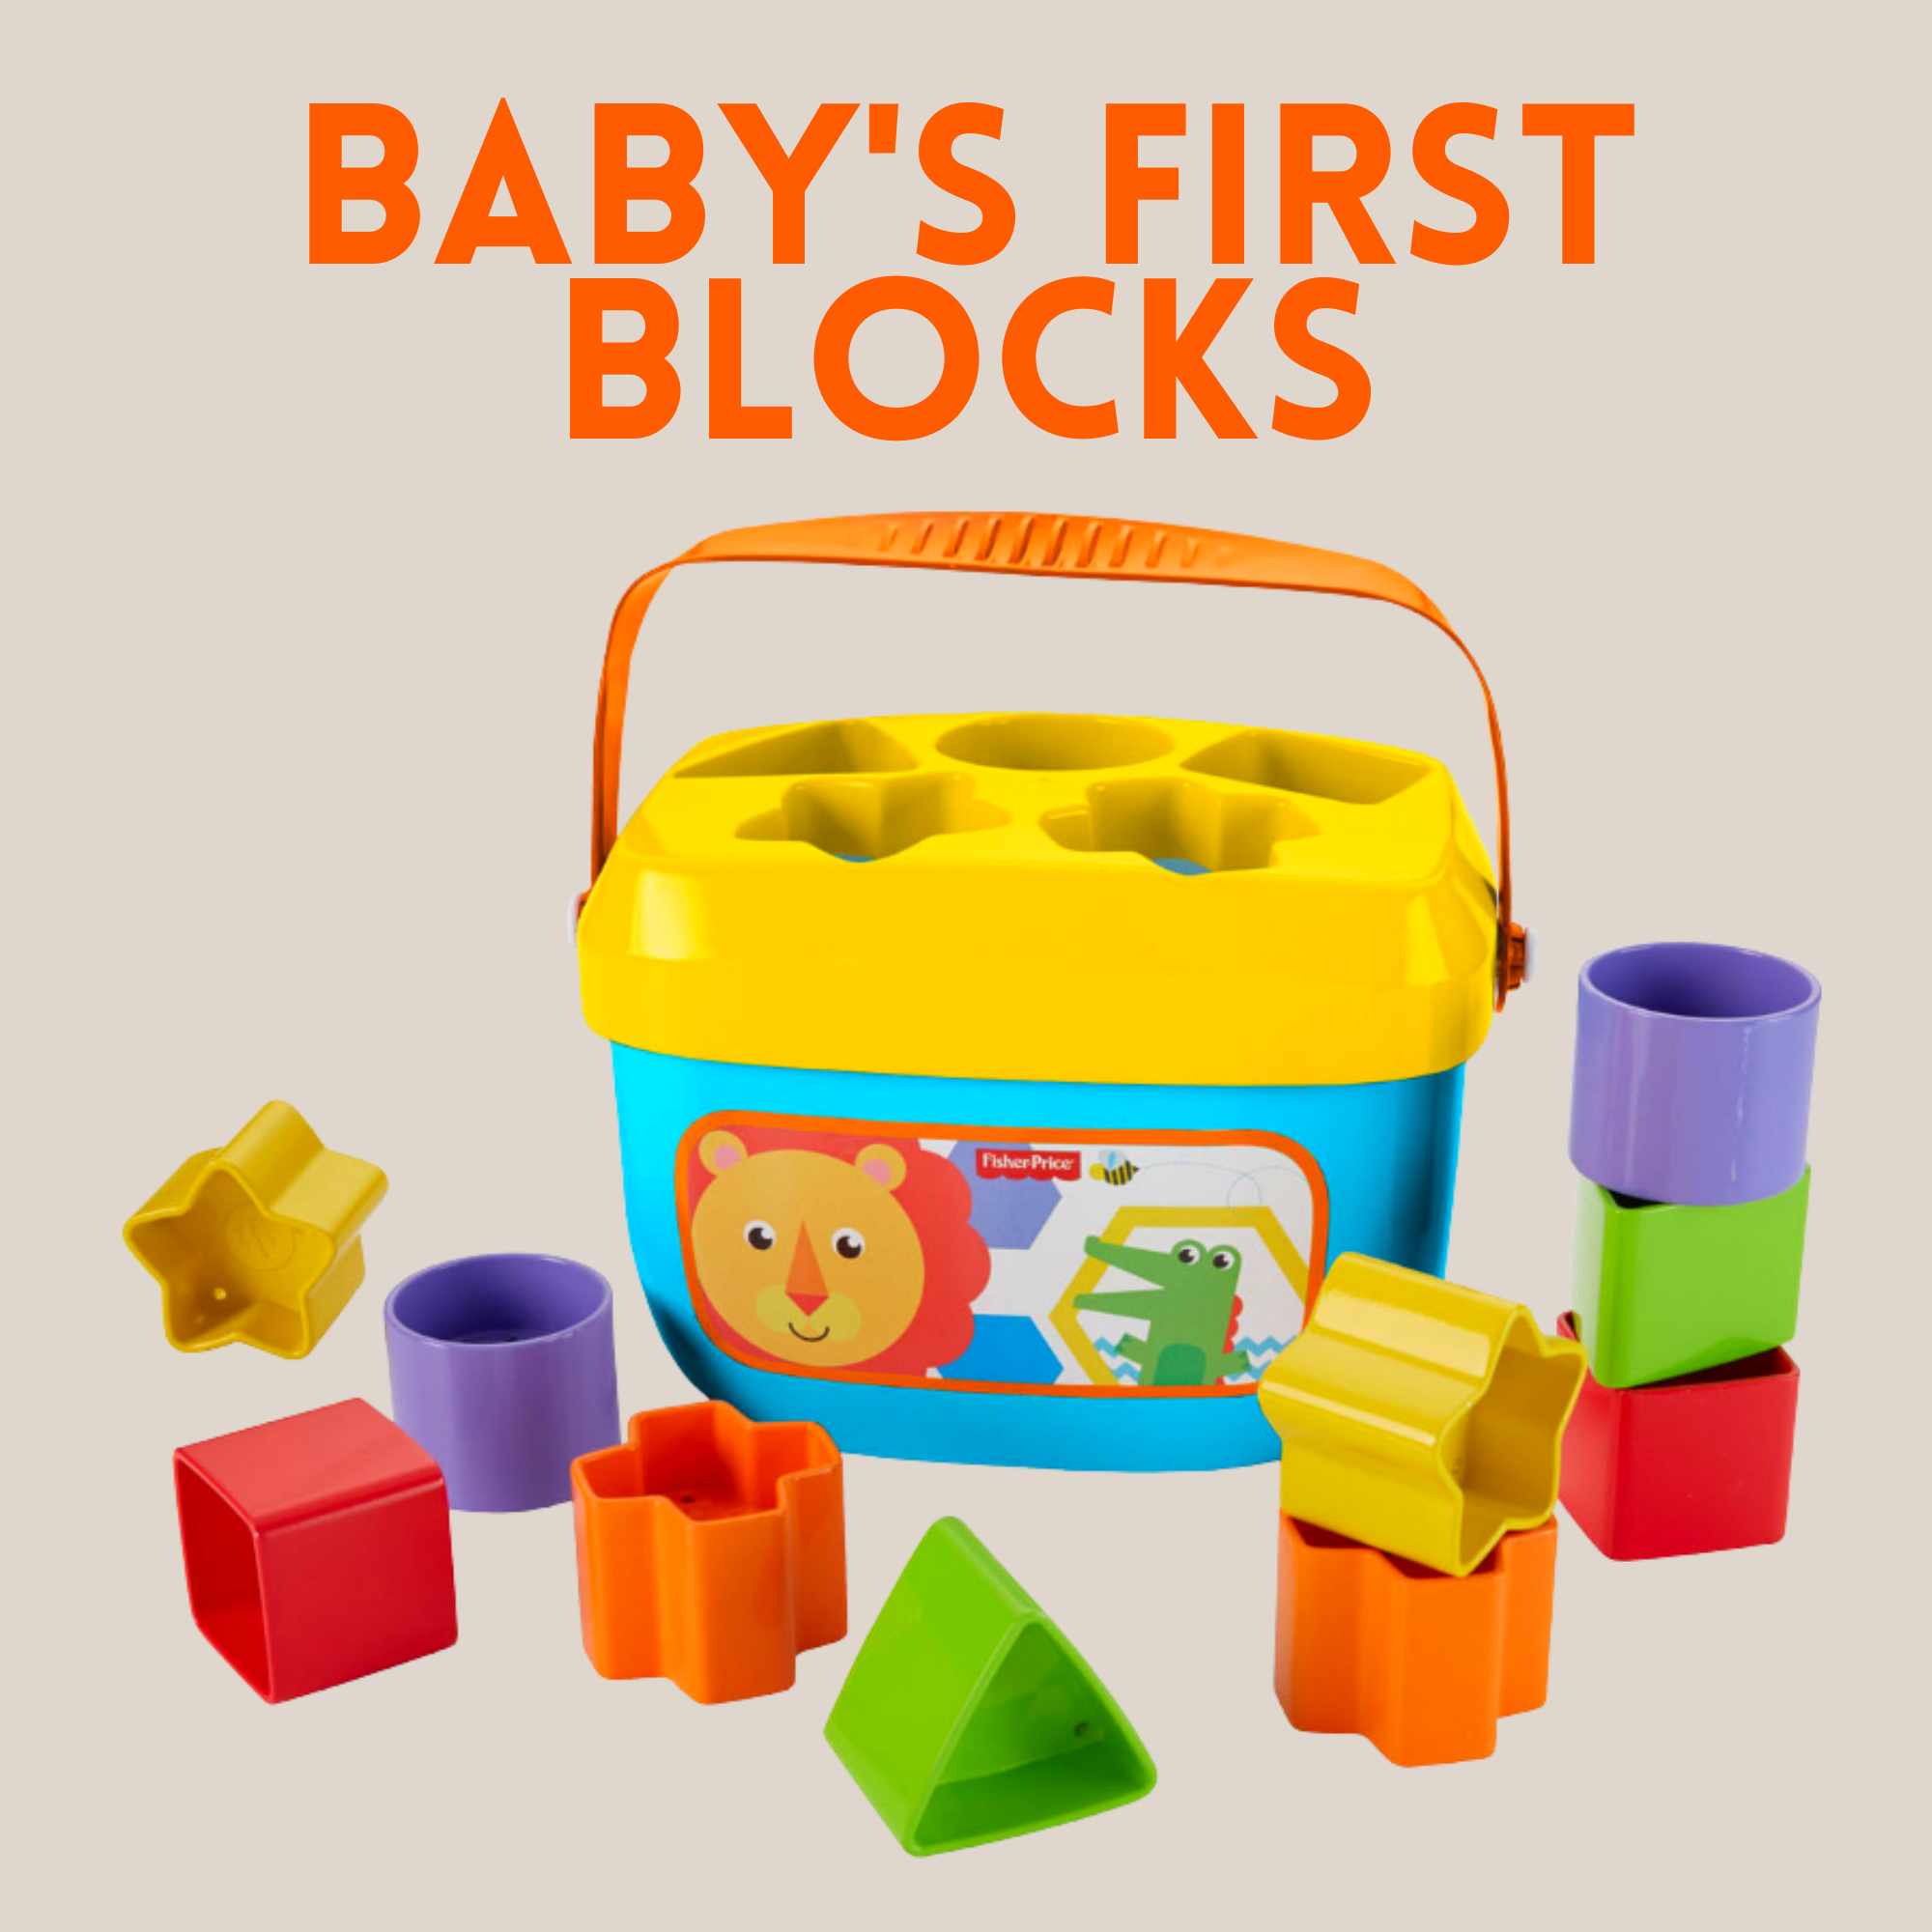 Baby's First Blocks